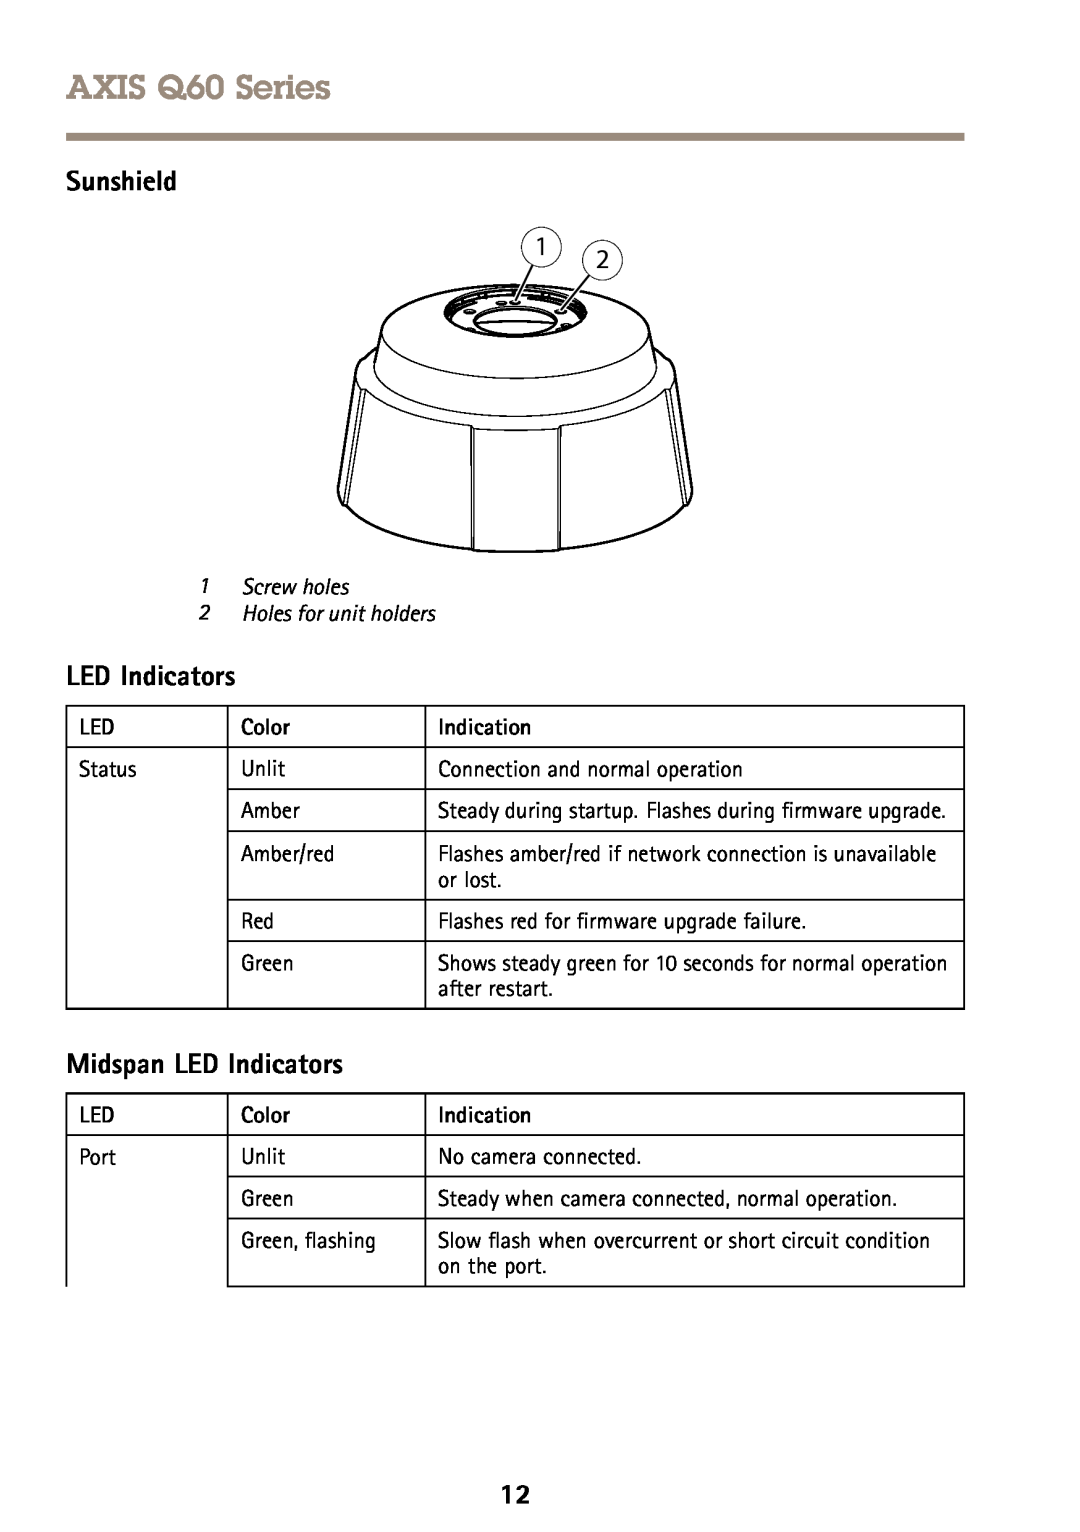 Axis Communications Q6045-E Sunshield, Midspan LED Indicators, 1Screw holes 2Holes for unit holders, Color, Indication 